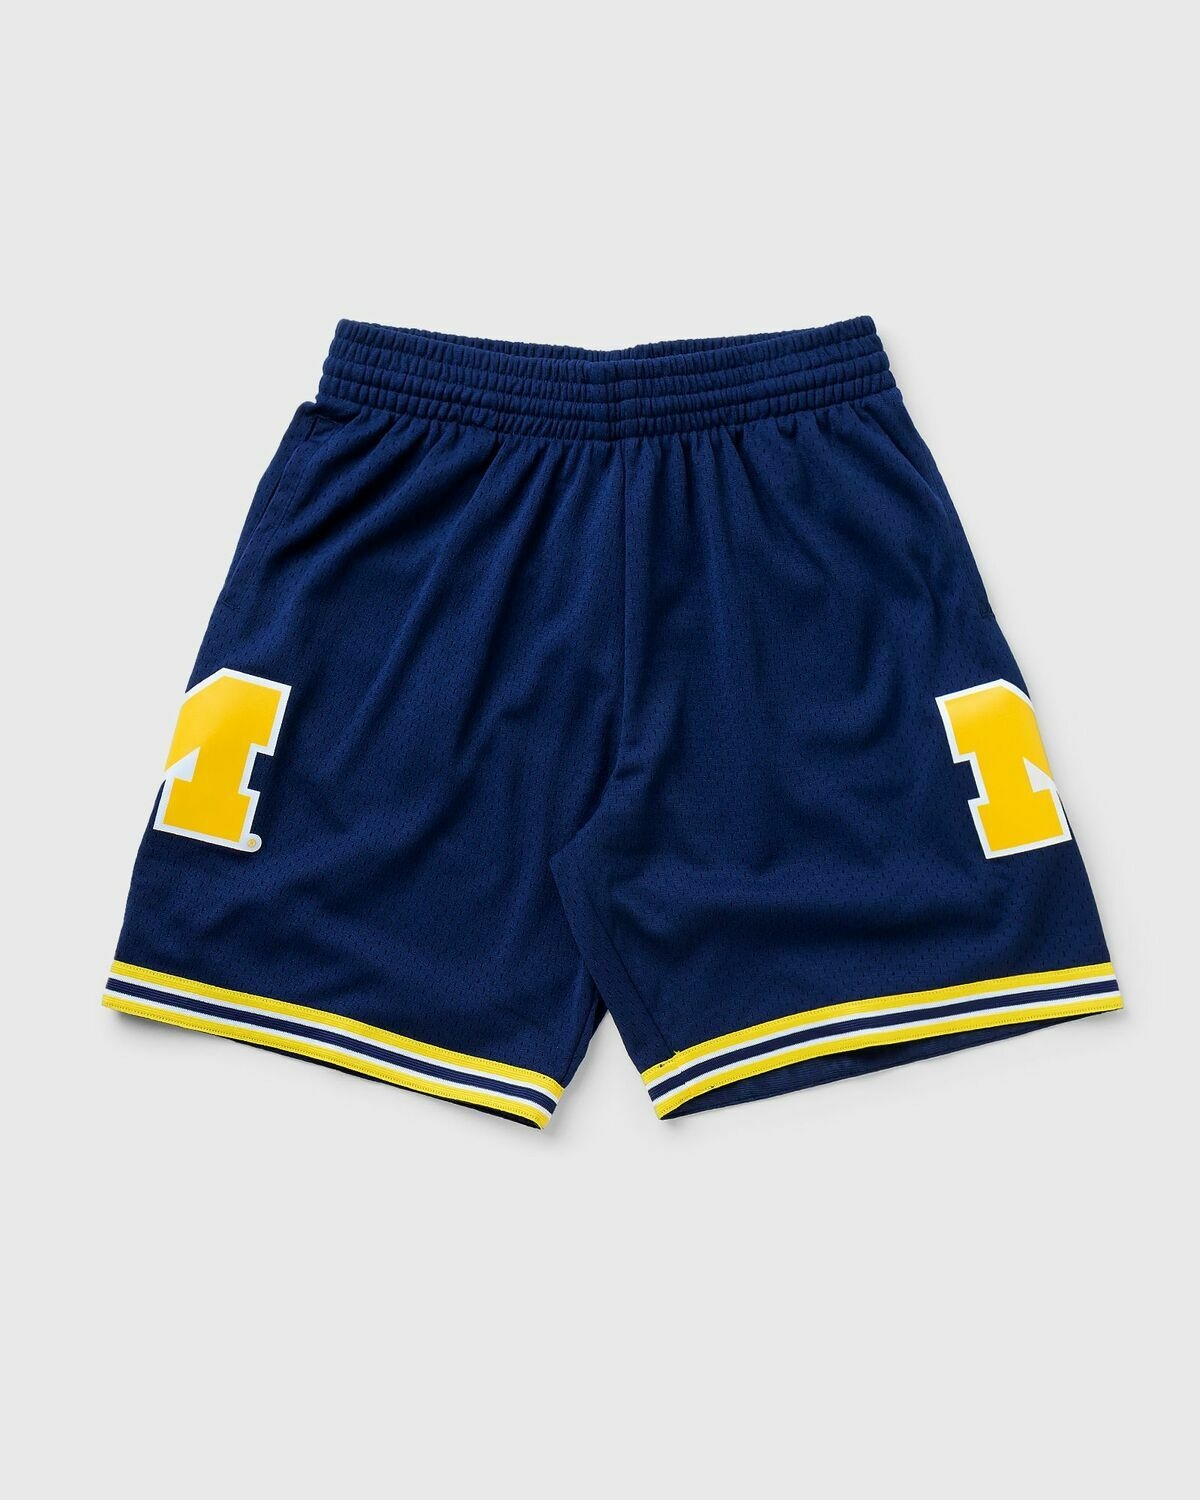 Mitchell & Ness Ncaa Swingman Shorts University Of Michigan Road 1991 92 Blue - Mens - Sport & Team Shorts